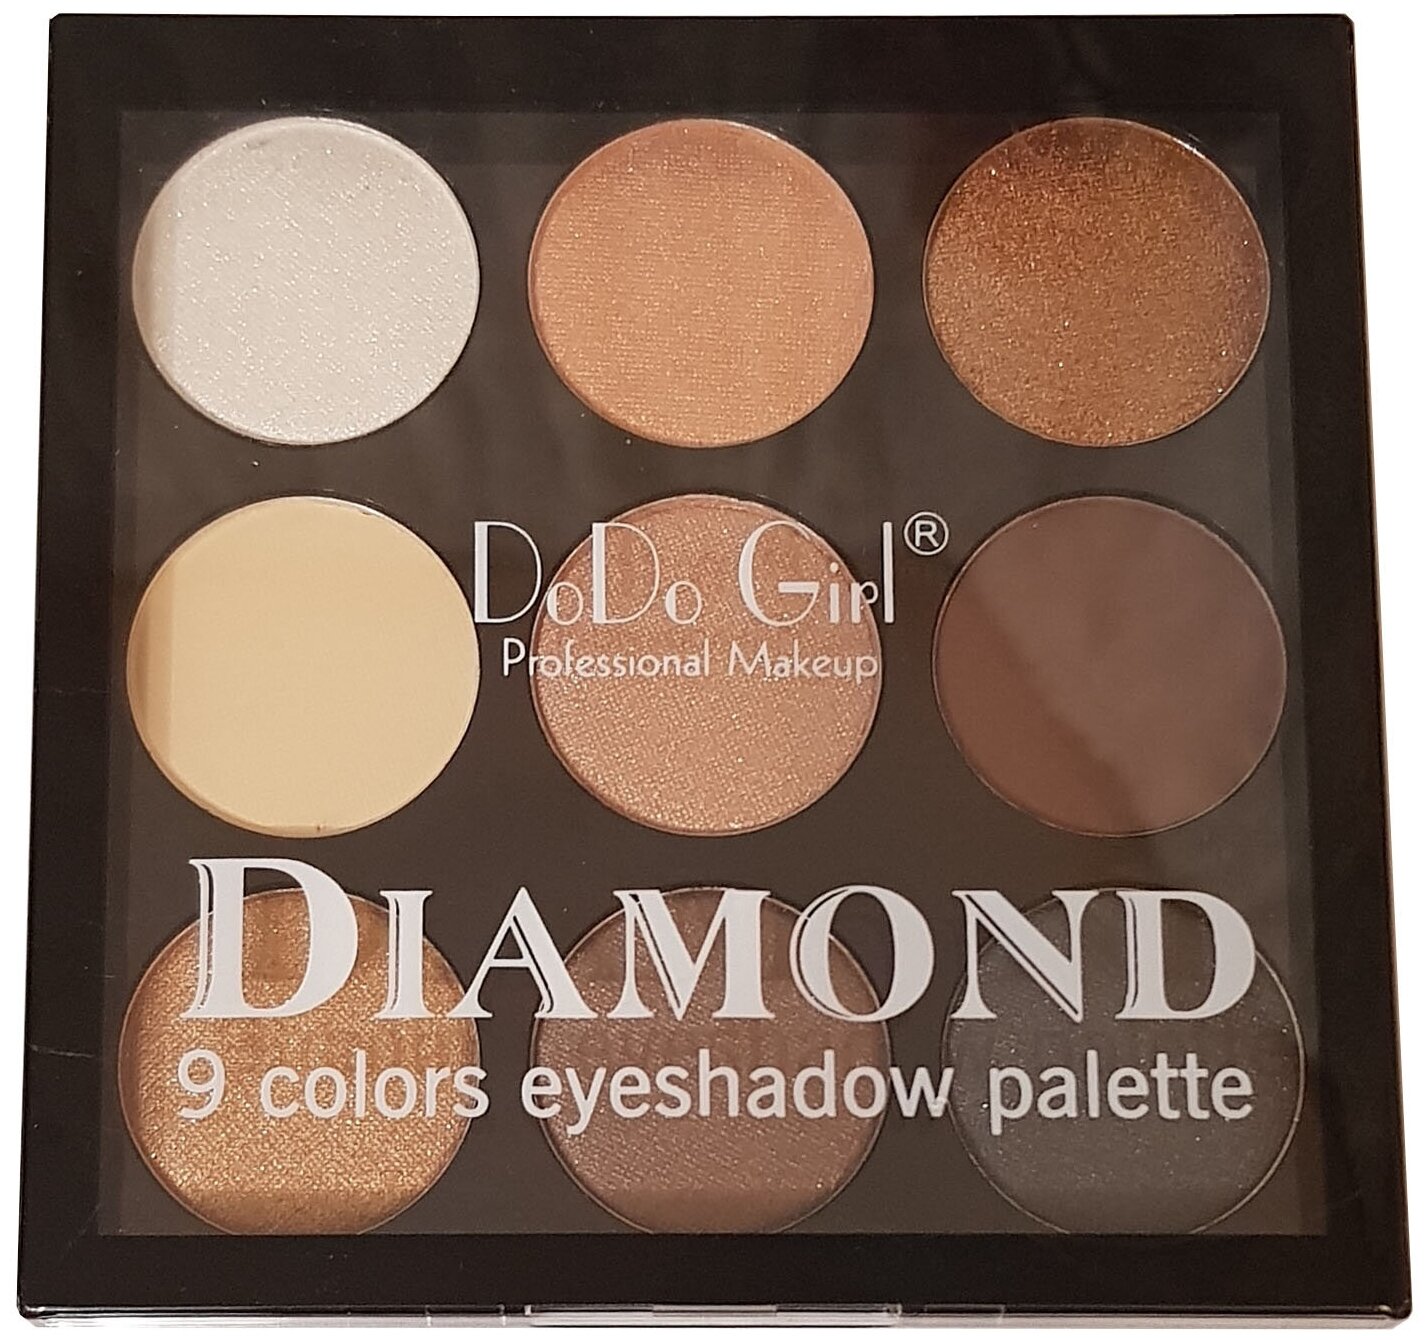 Палетка теней для глаз DoDo Girl Diamond Eyeshadow Palette, 9 оттенков, набор 03